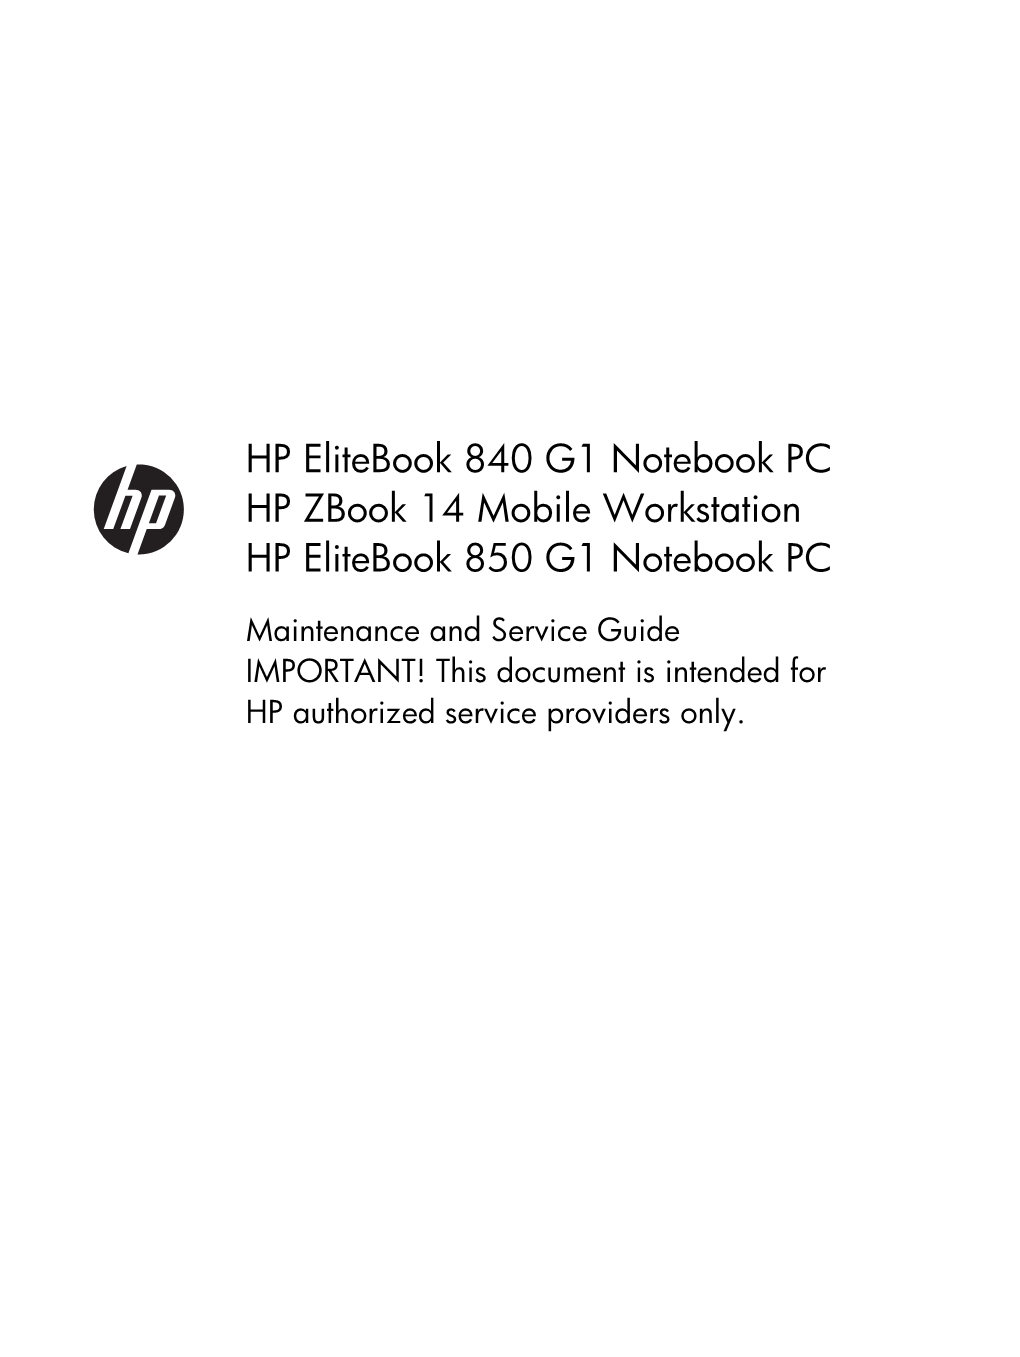 HP Elitebook 840 G1 Notebook PC HP Zbook 14 Mobile Workstation HP Elitebook 850 G1 Notebook PC